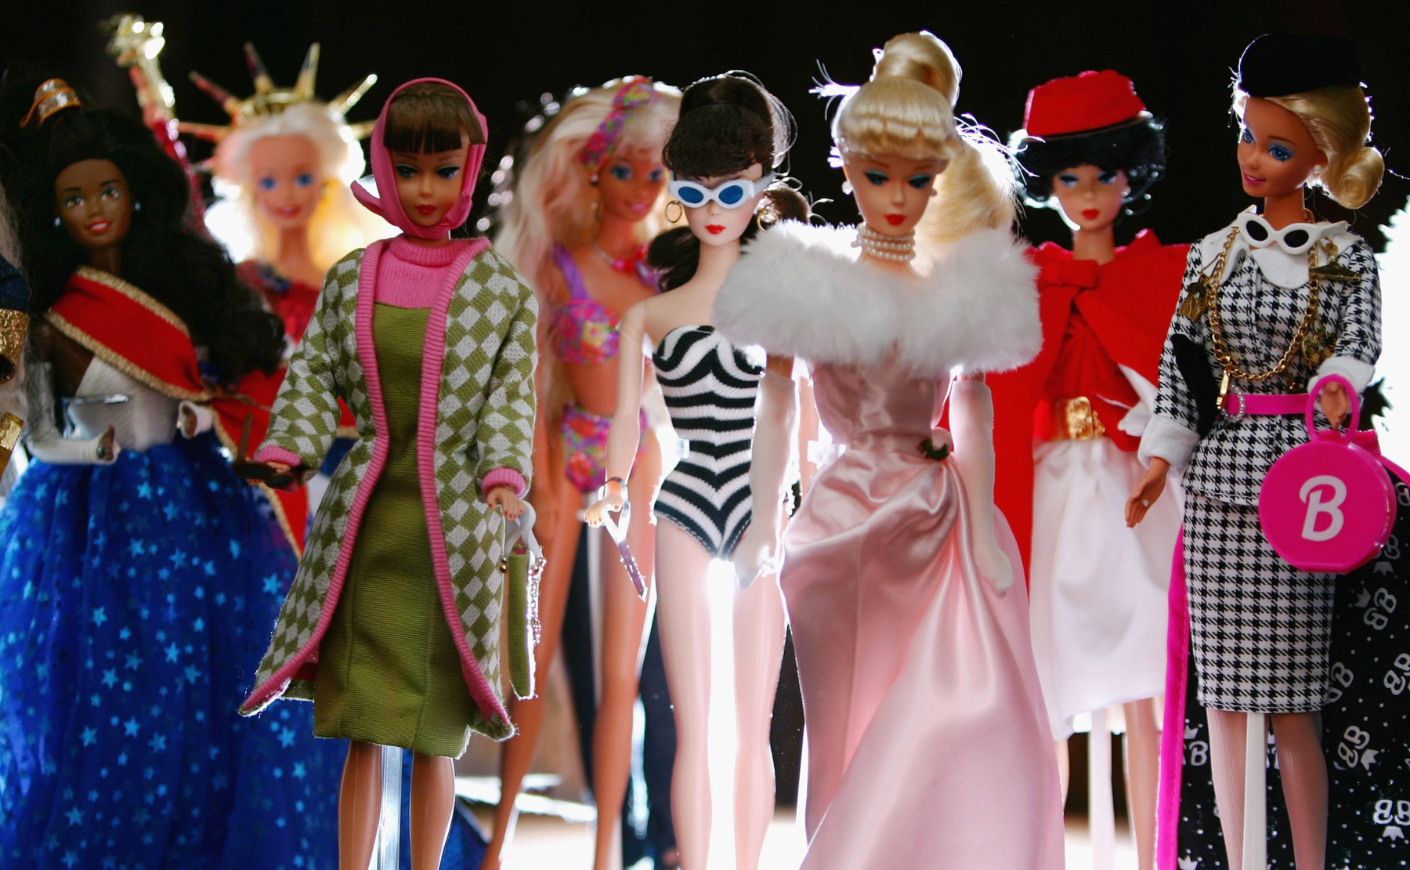 Barbie Fabric Fashion Paper Dolls 